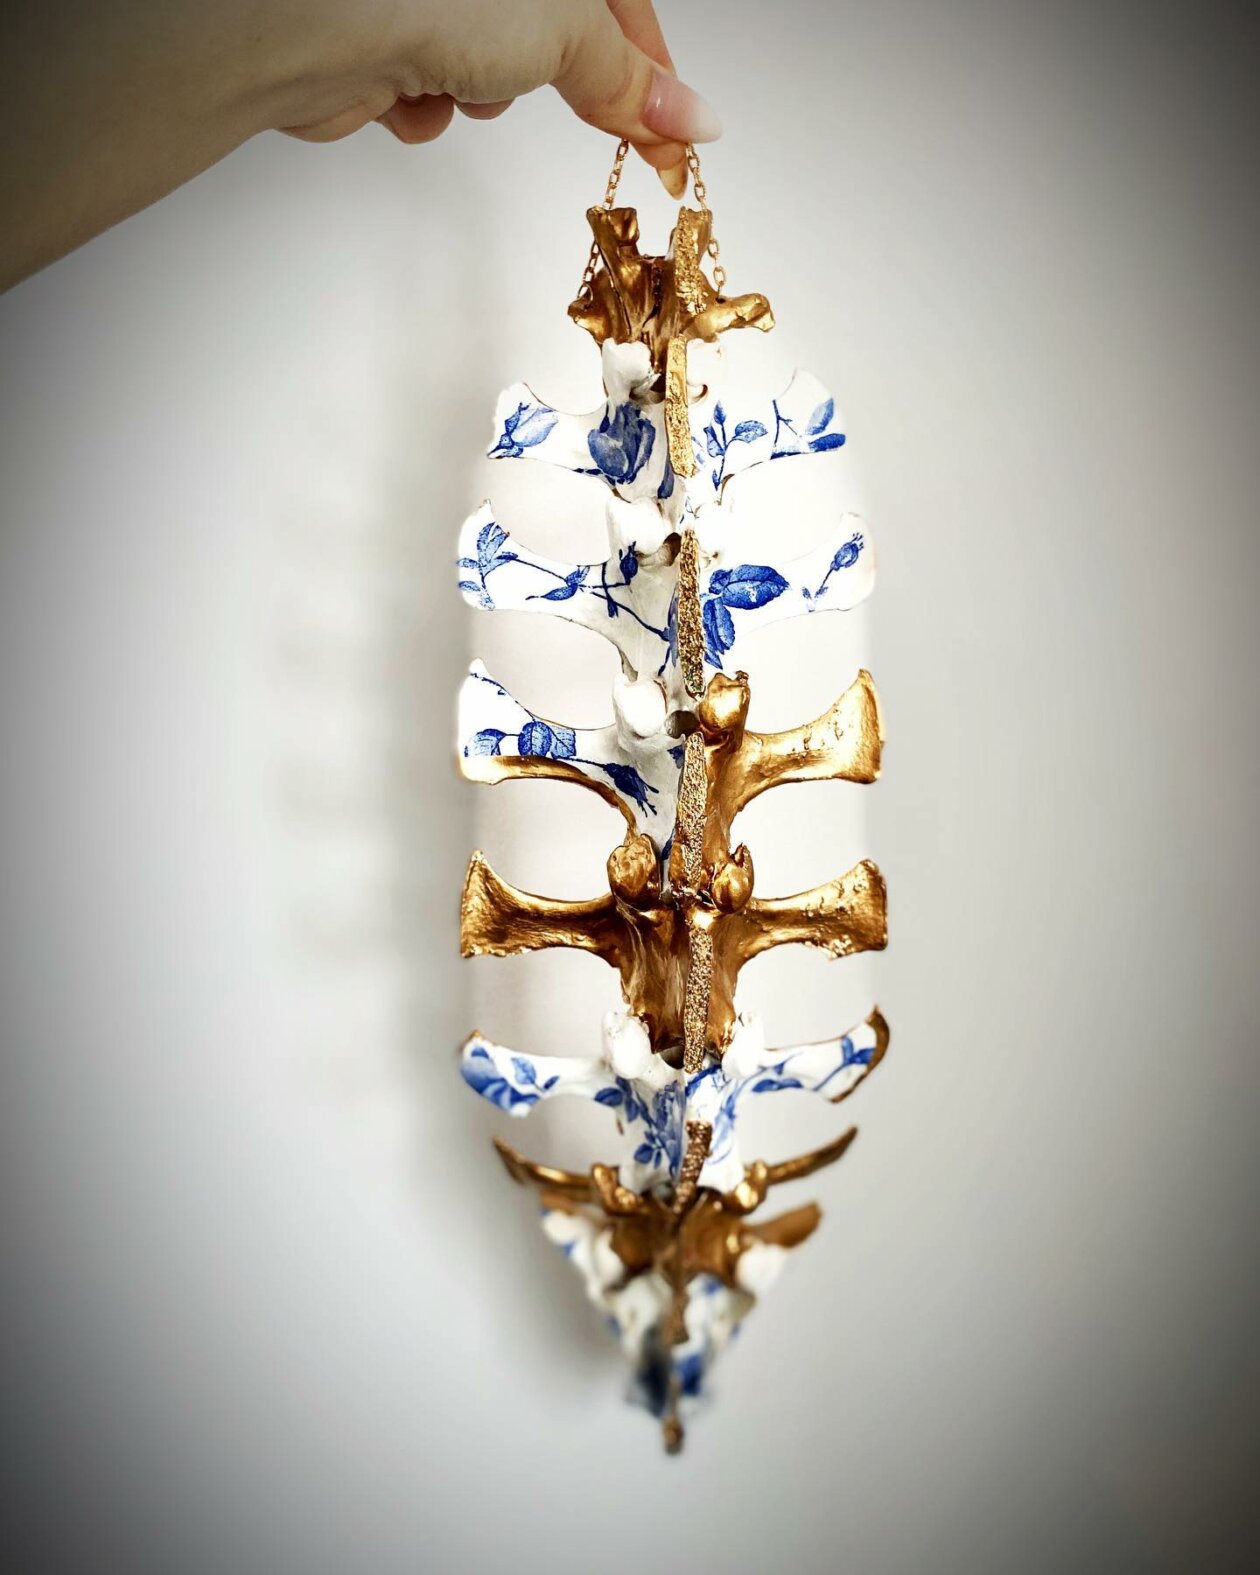 The Floral Decorated Bone And Skull Art Of Emmanuelle Jobidon (9)